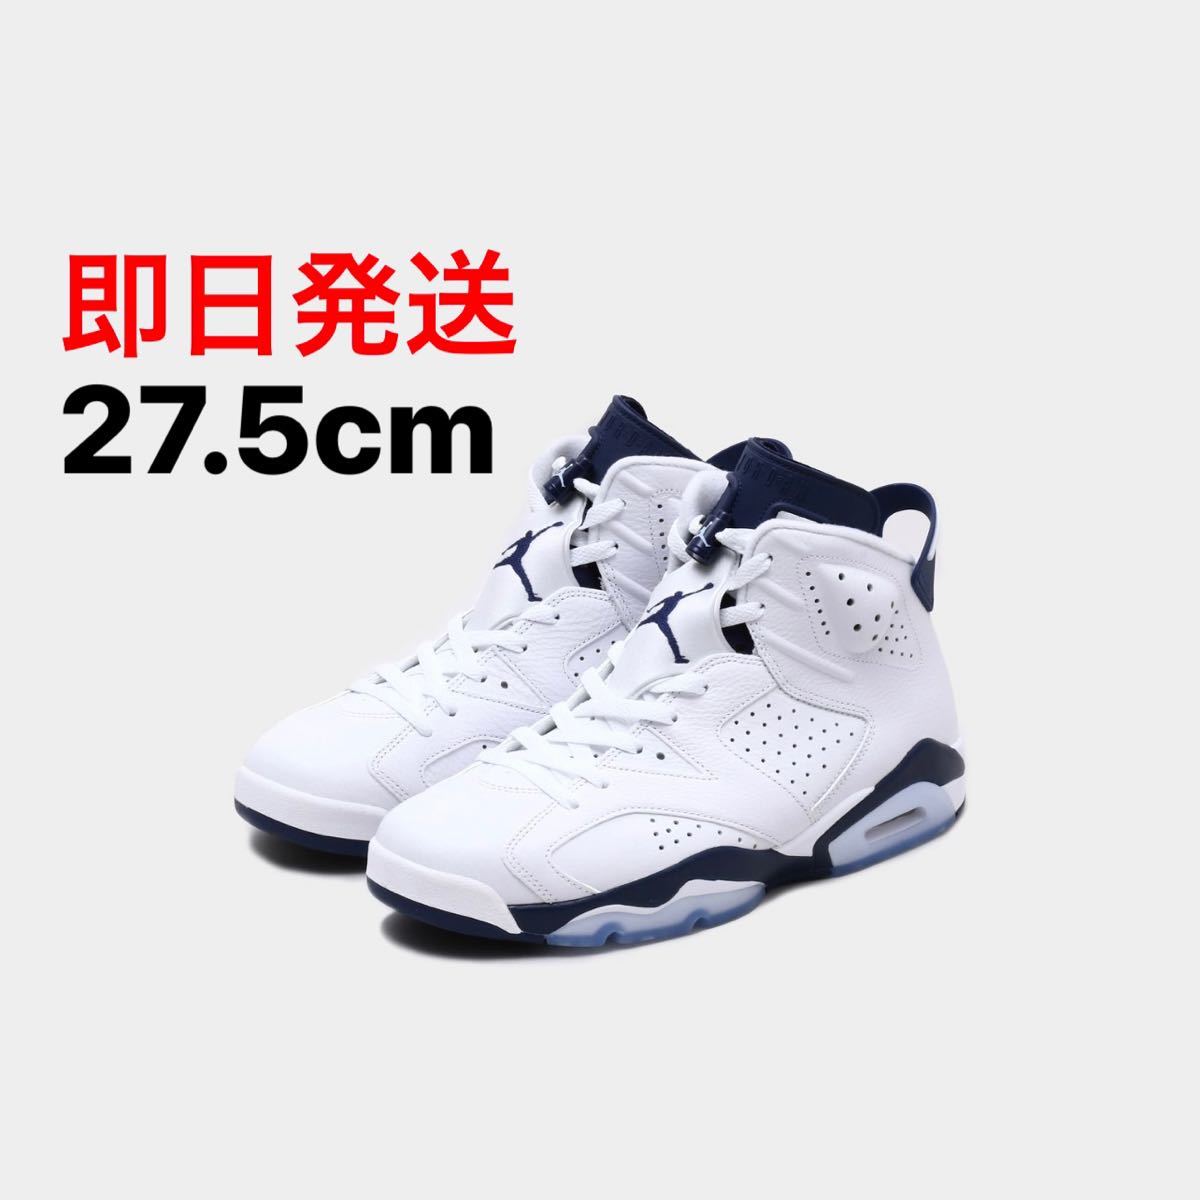 27.5cm Nike Air Jordan Midnight Navyナイキエアジョーダン AJ6